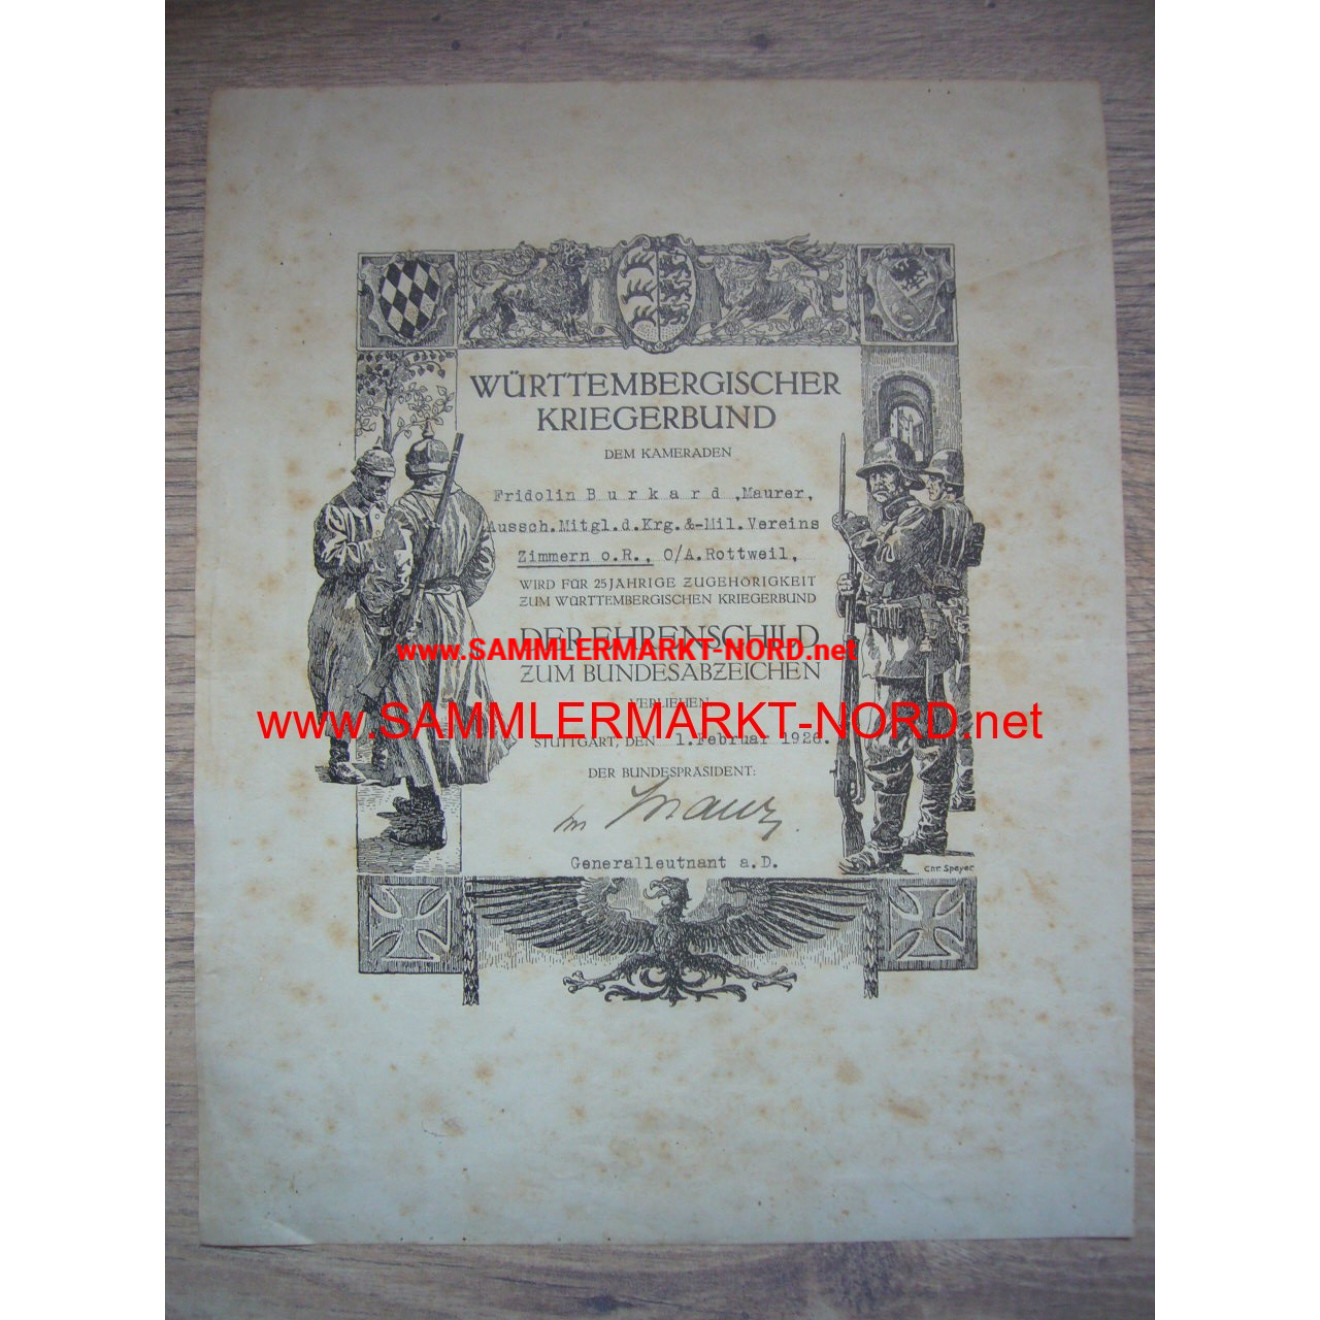 Württembergischer Kriegerbund - Honor Shield Certificate